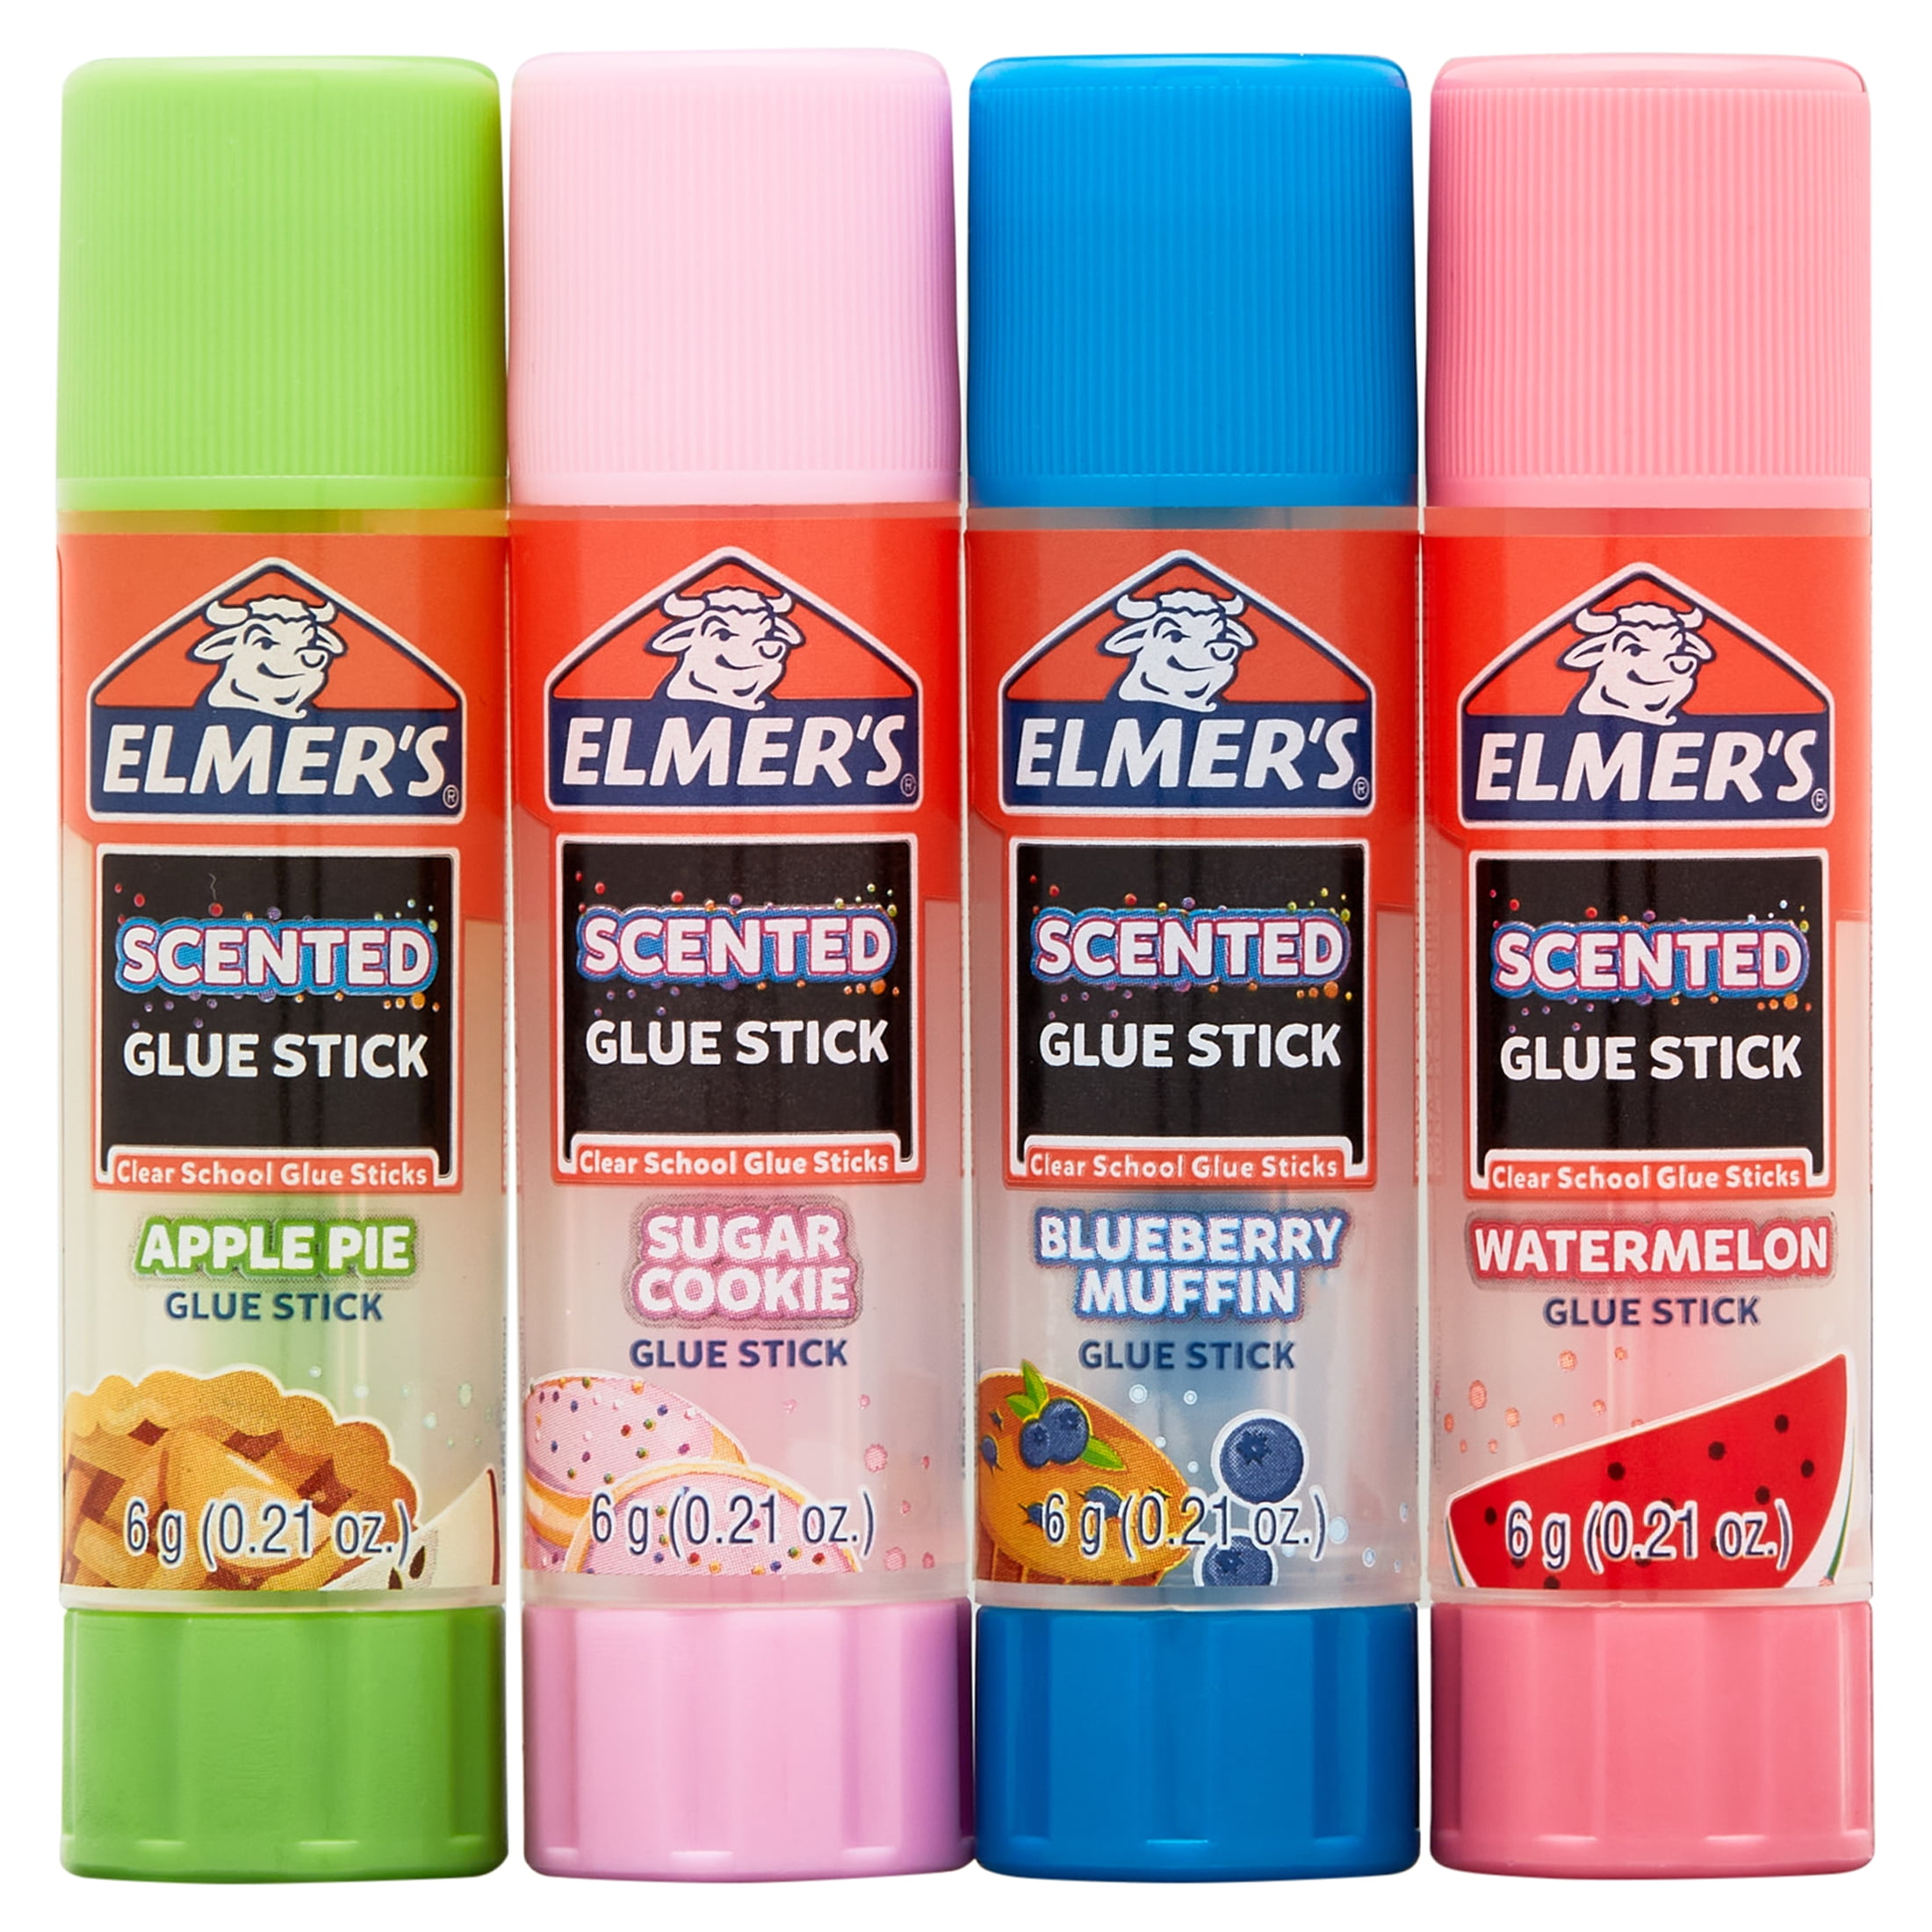 Elmer’s Giant Scented Glue Sticks Variety Pack, 22 Gram, 3 Count